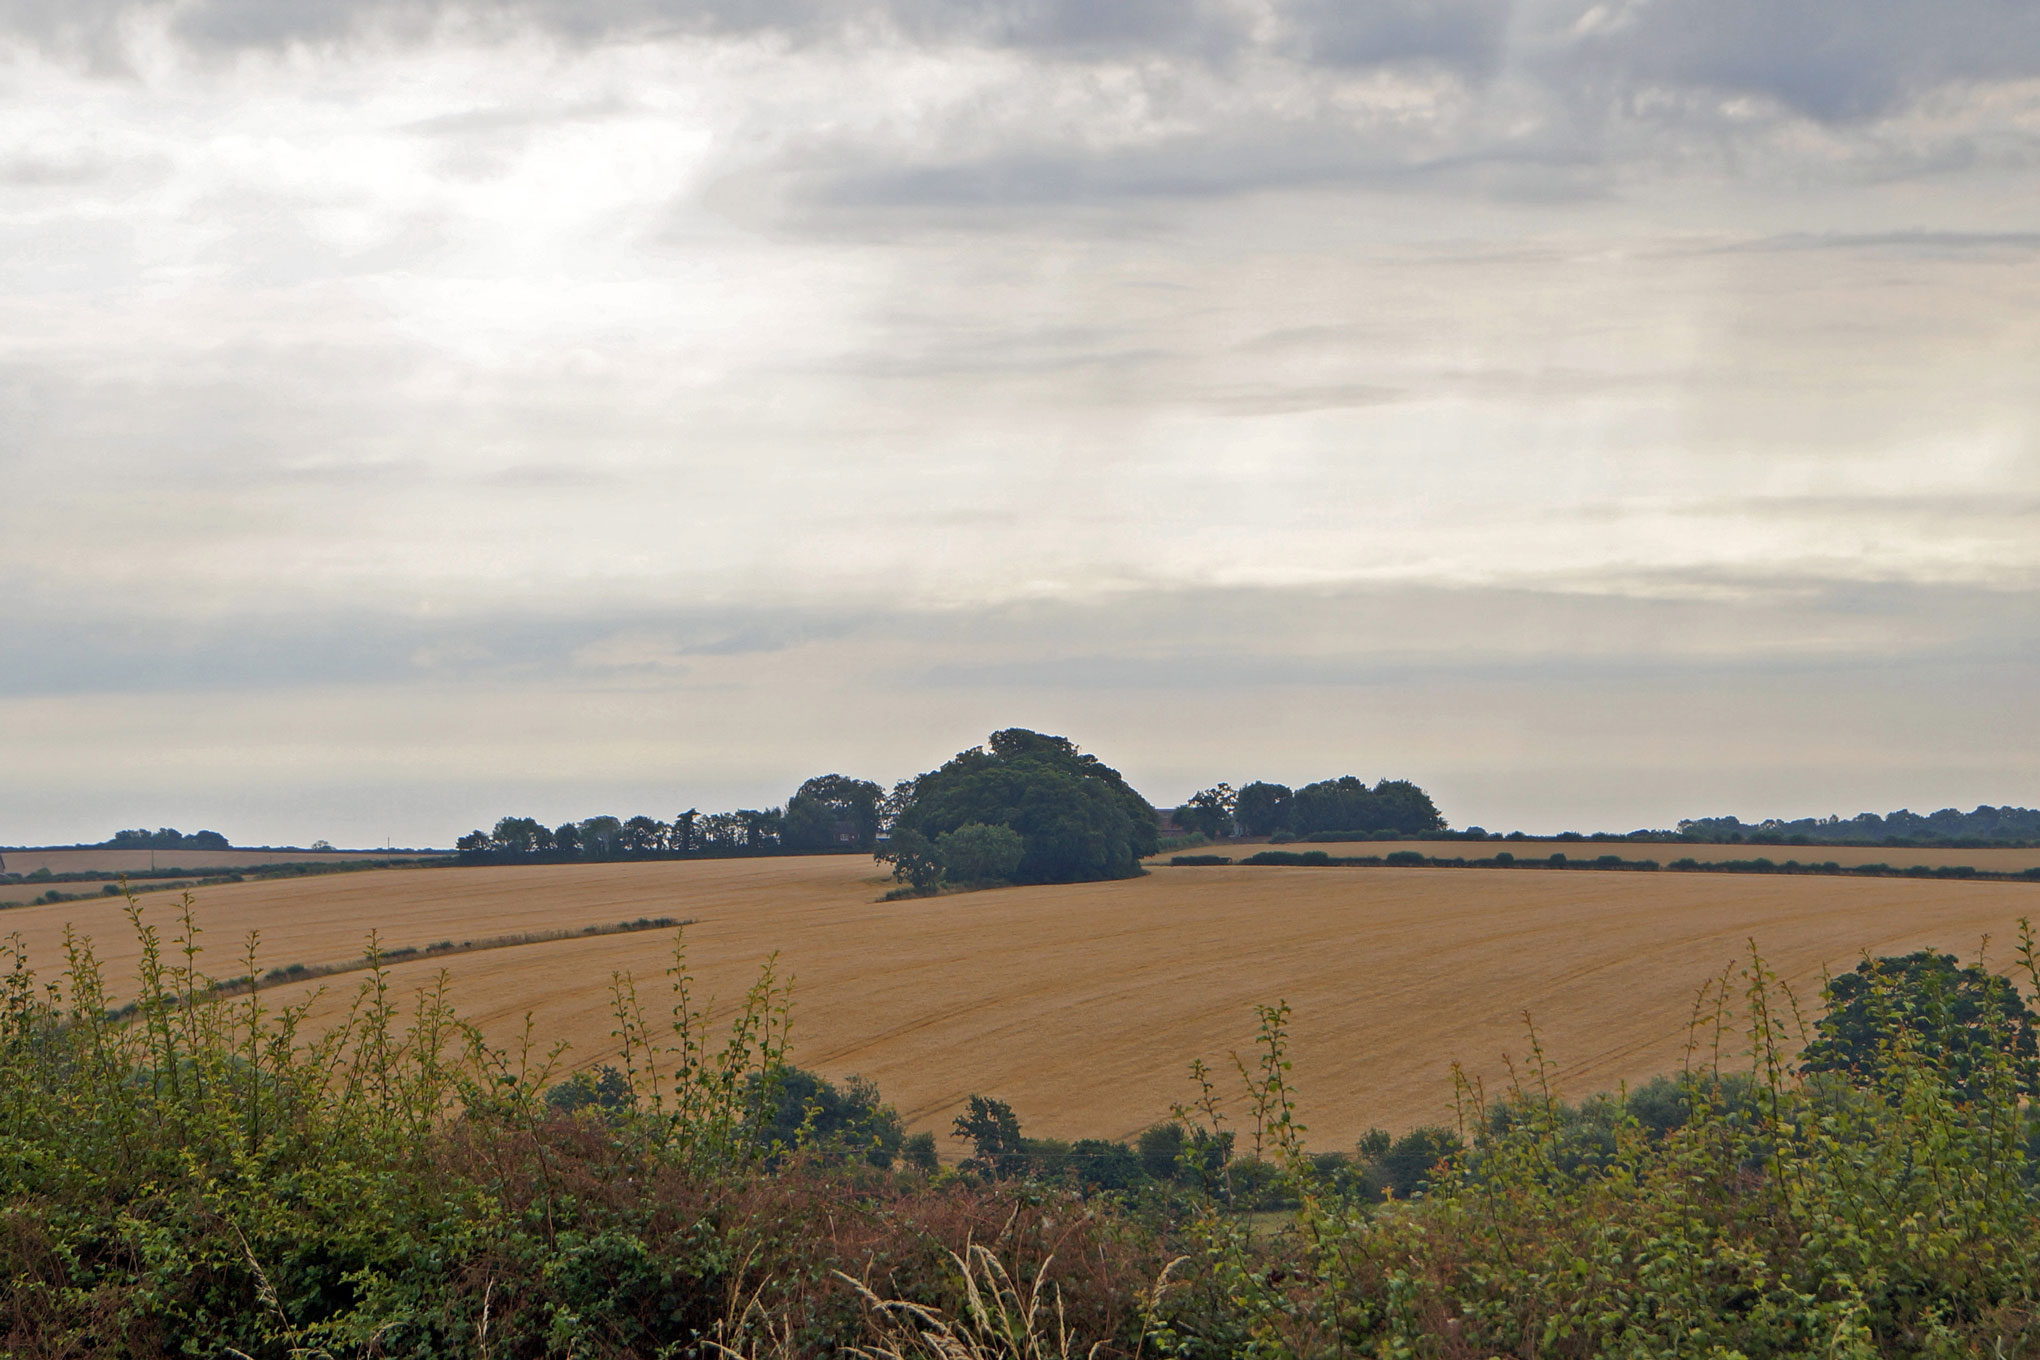 View across fields to a tree-grown barrow.